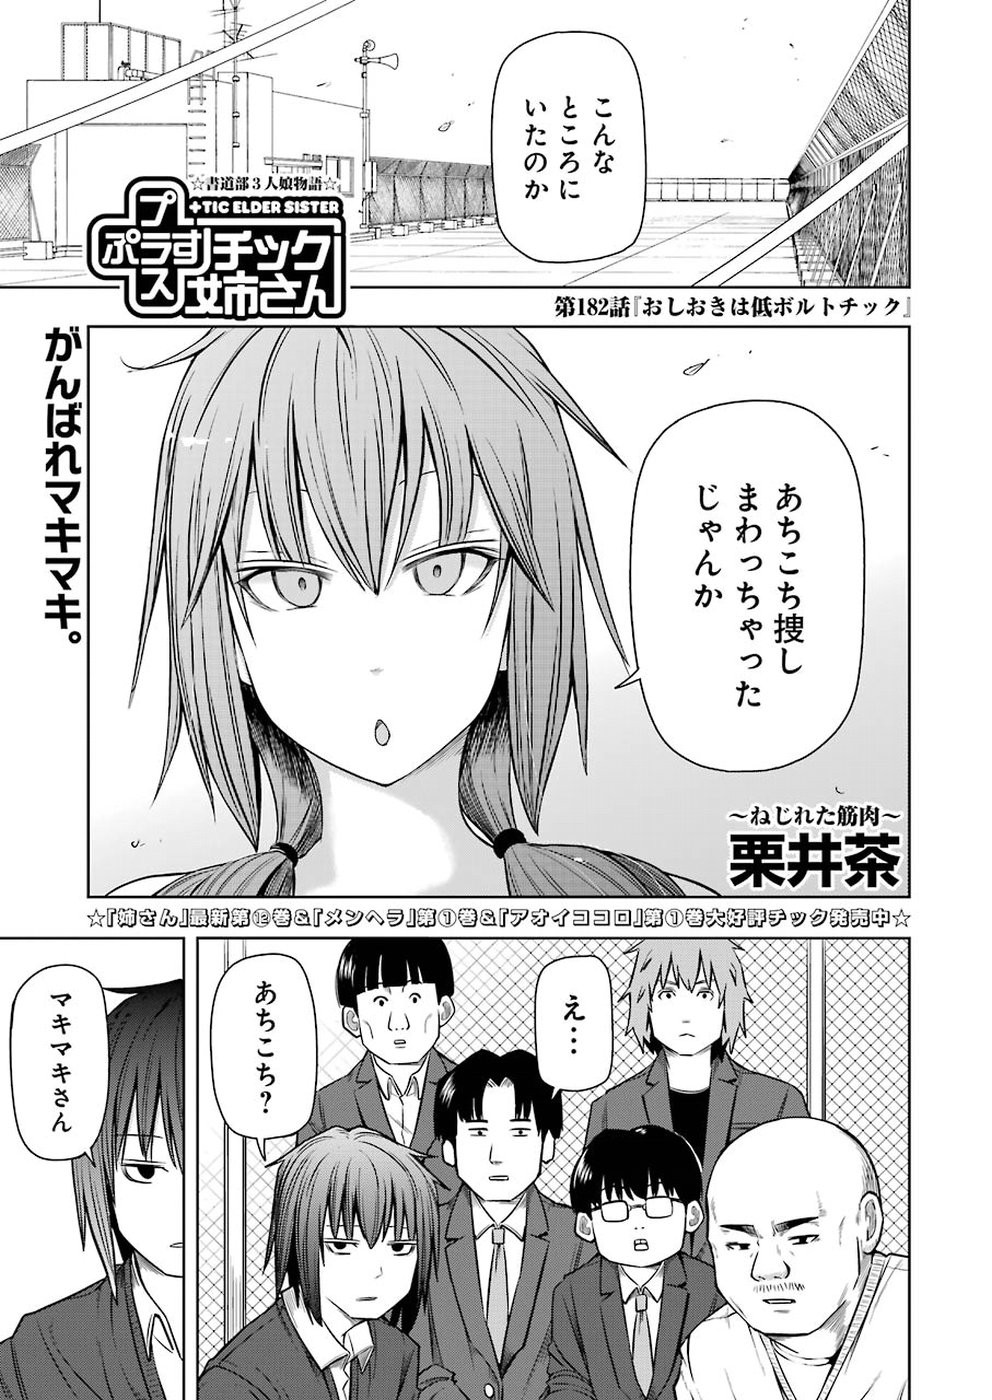 Tic Nee San Chapter 1 Page 1 Raw Sen Manga